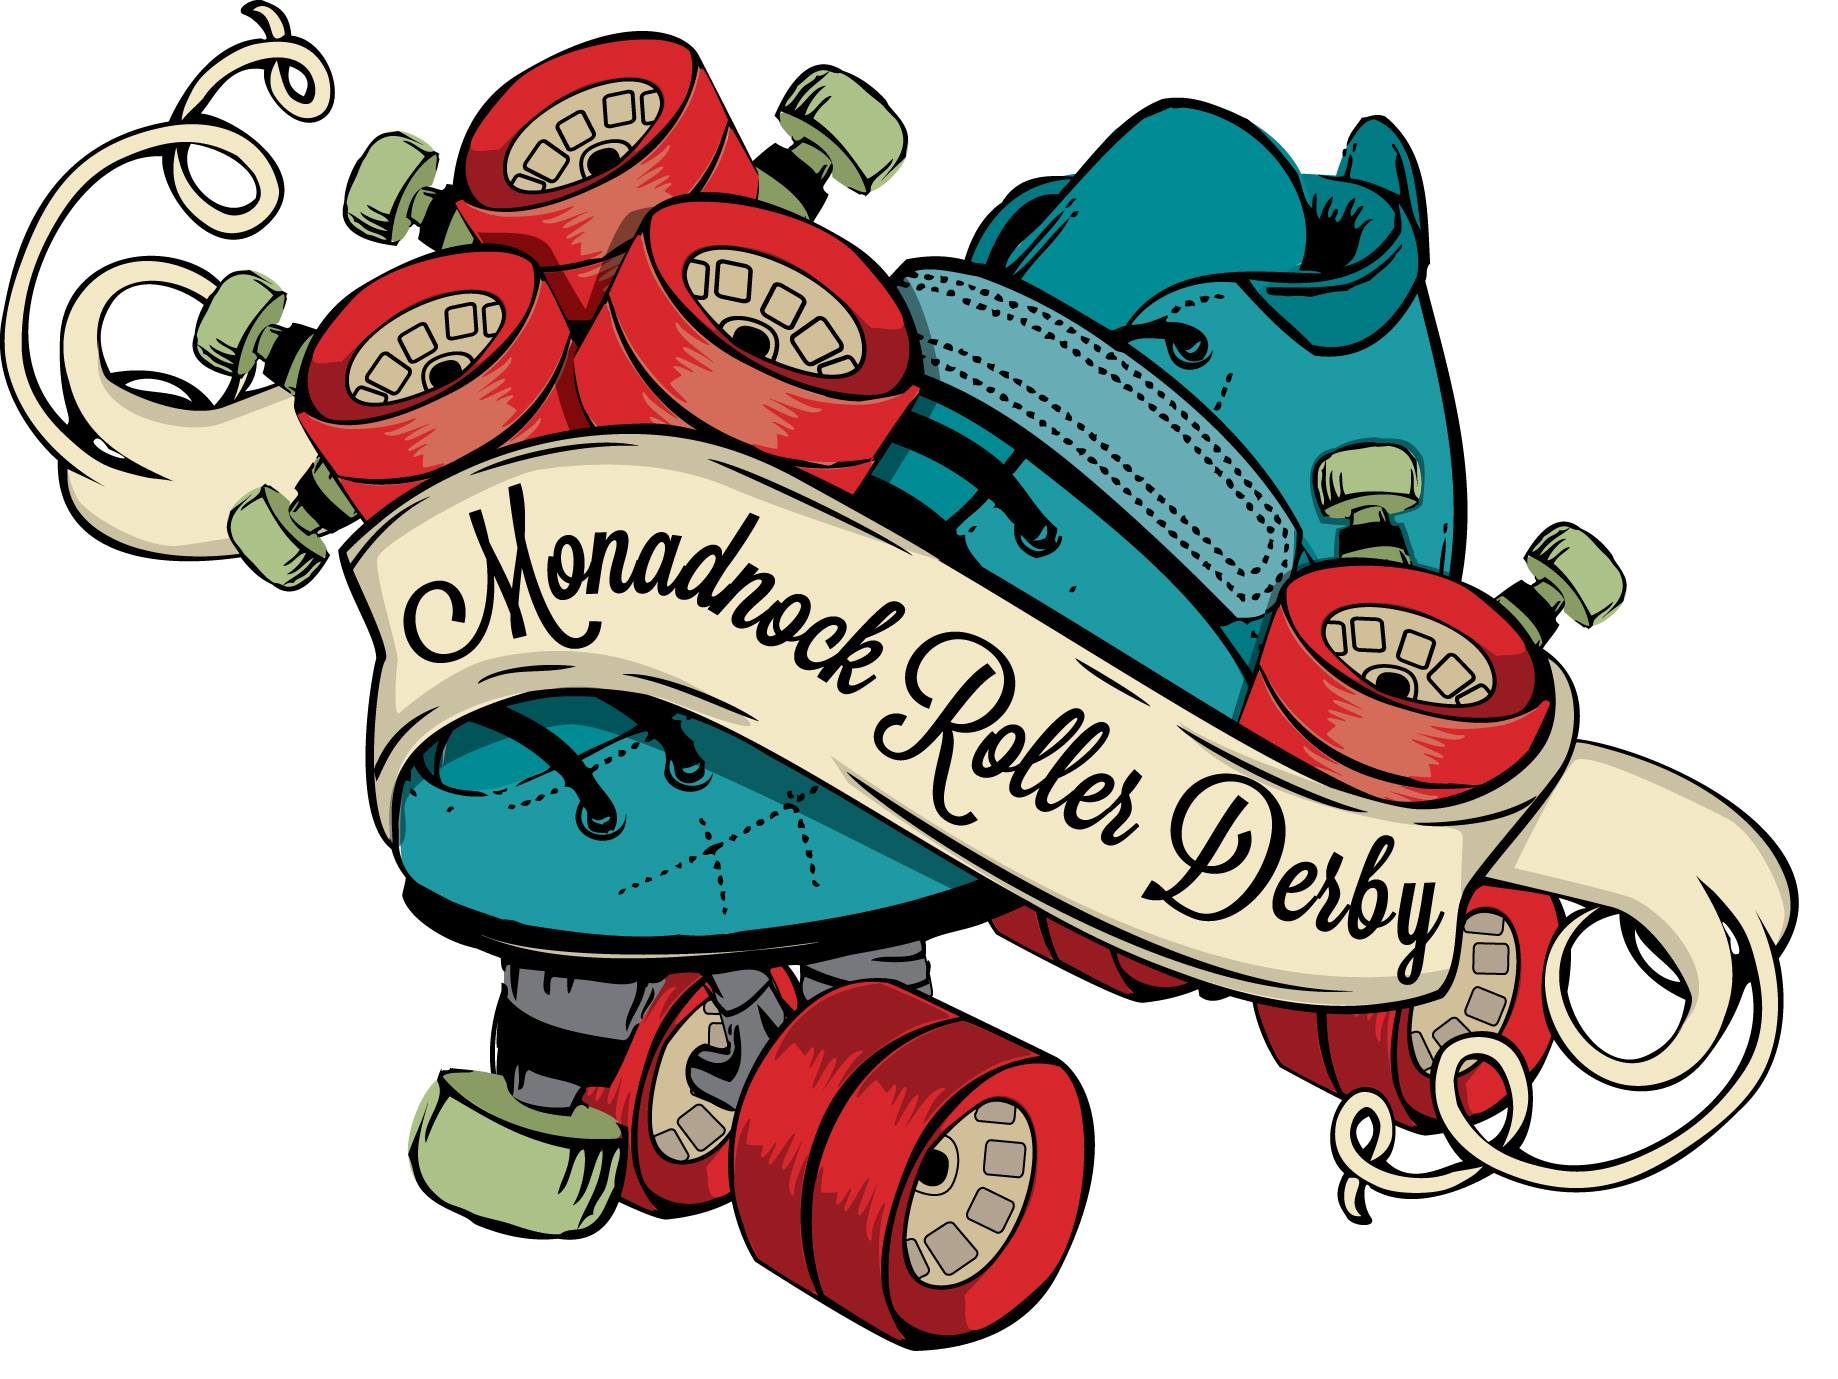 Monadnock Roller Derby